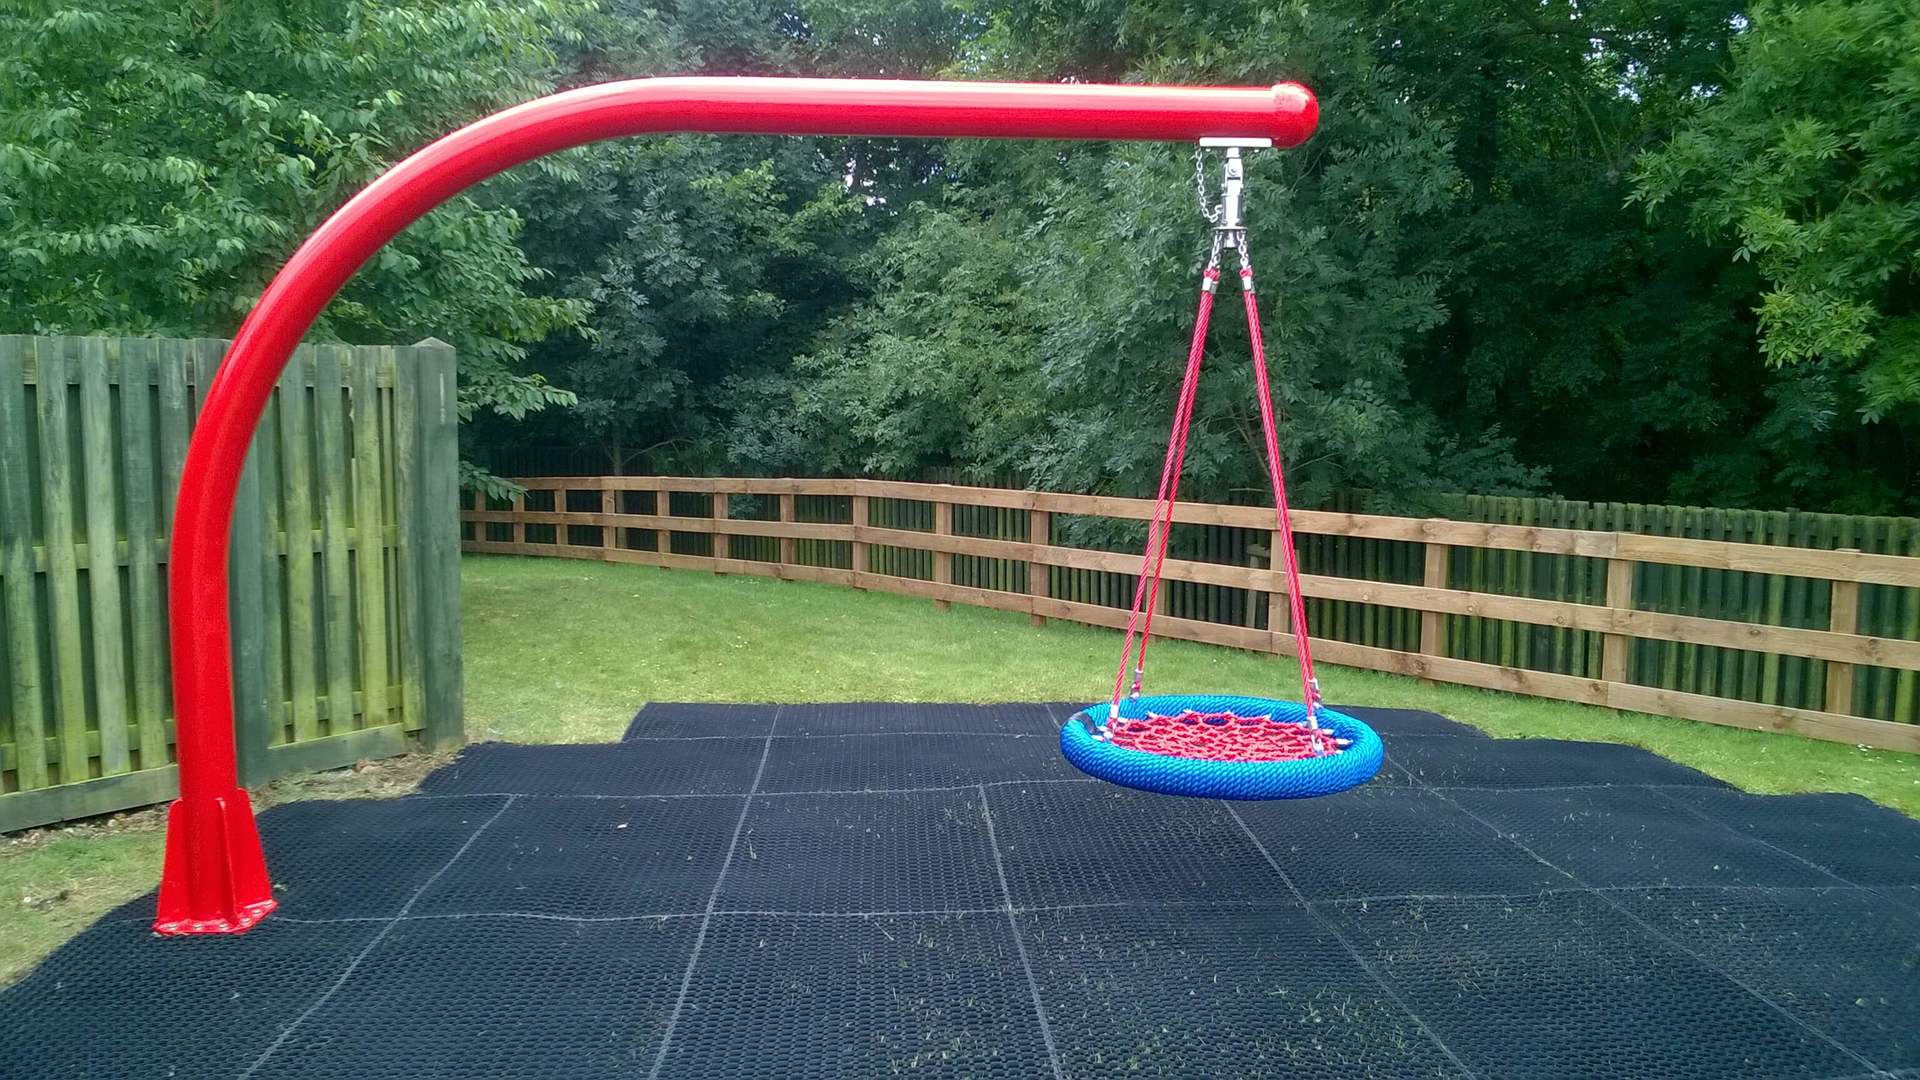 Playground Swing on Rubber Matting